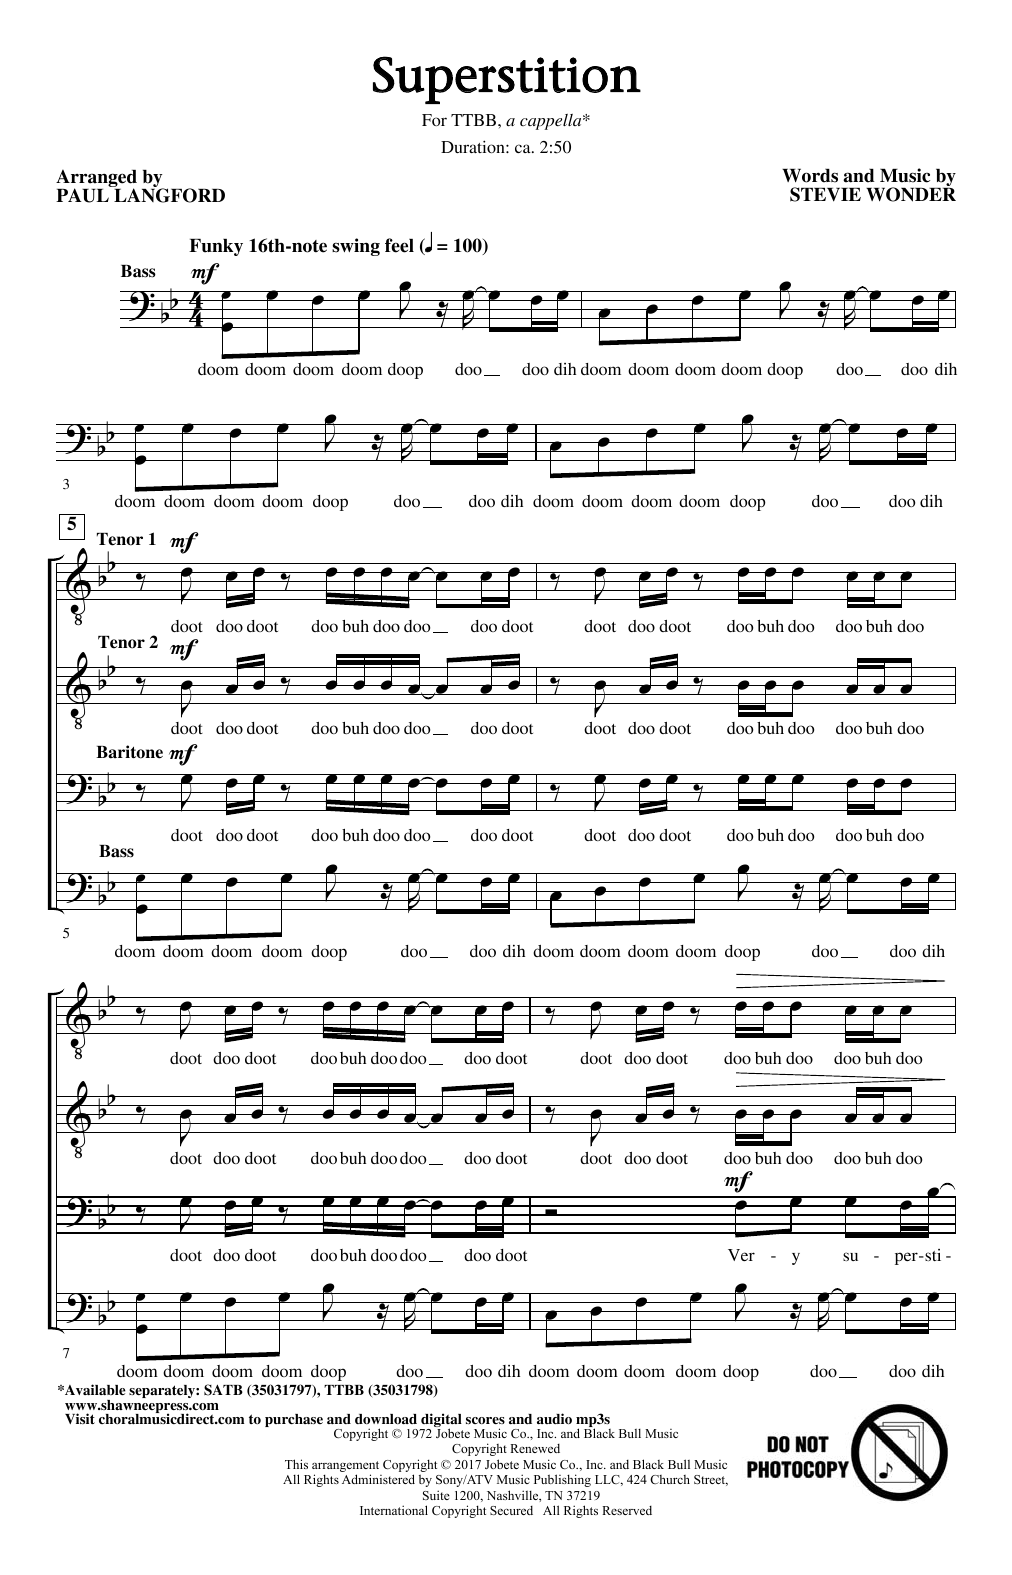 Stevie Wonder Superstition (arr. Paul Langford) Sheet Music Notes & Chords for TTBB - Download or Print PDF